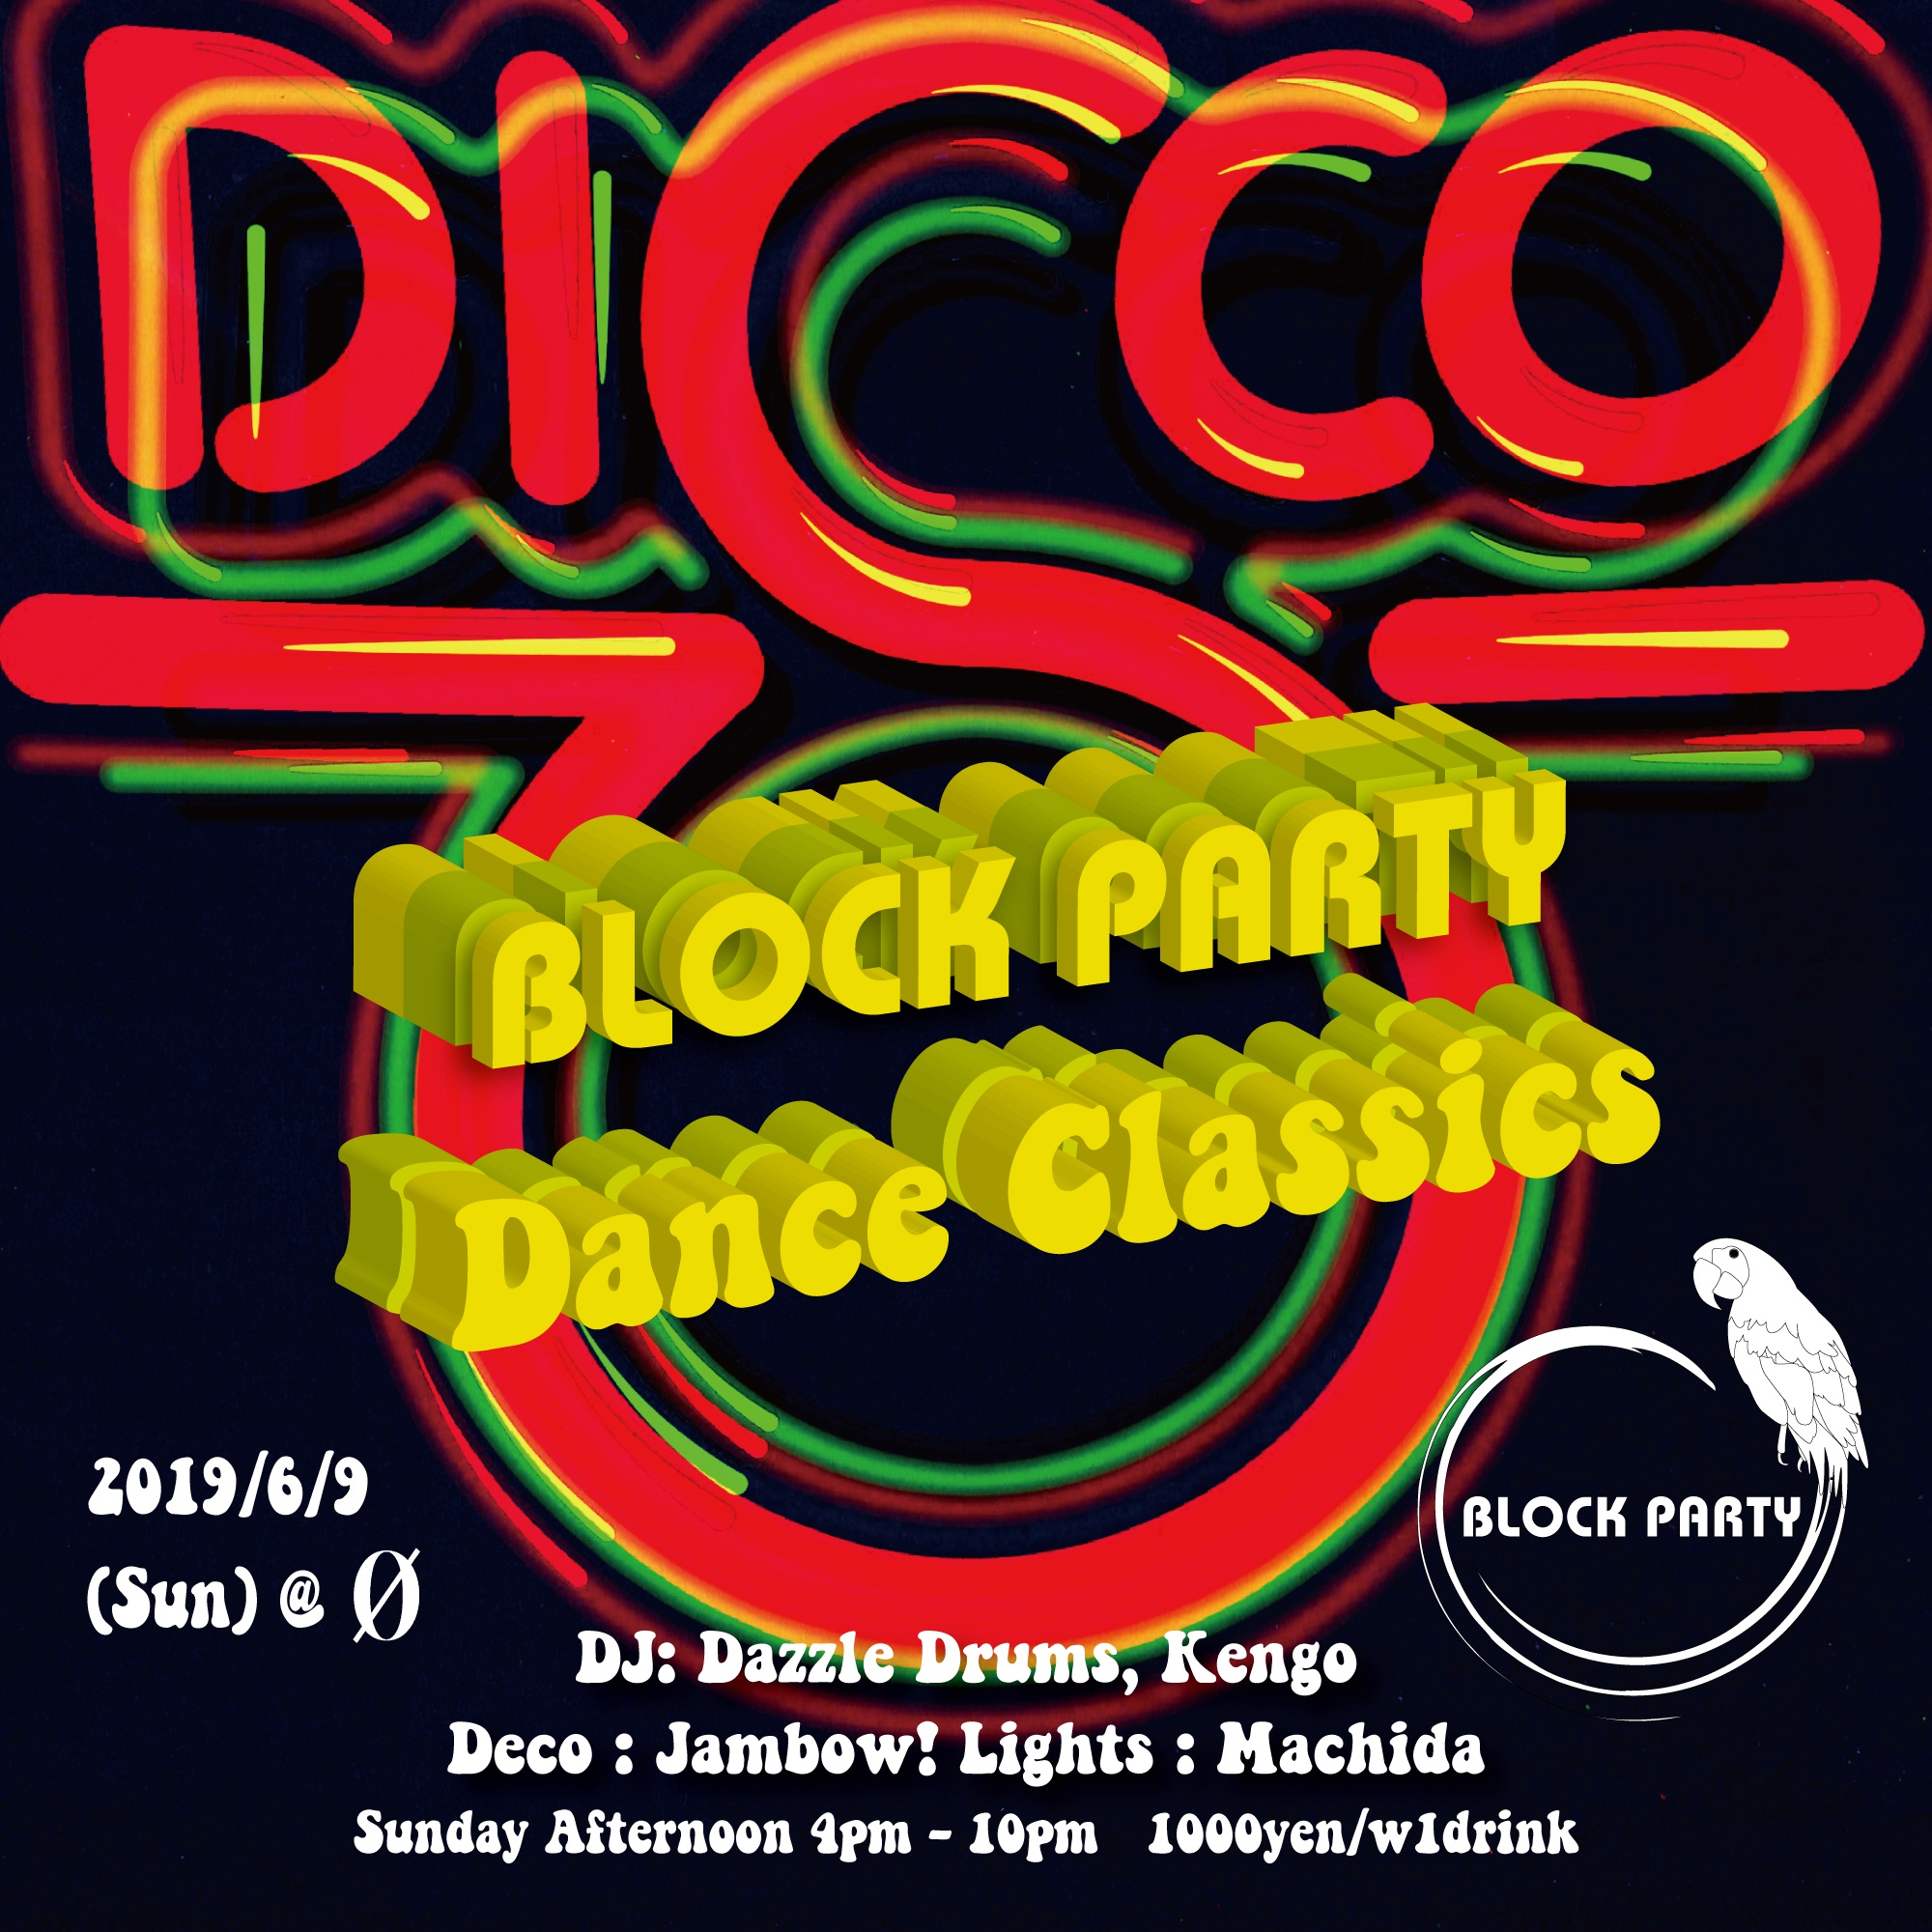 Block Party “Dance Classcis”